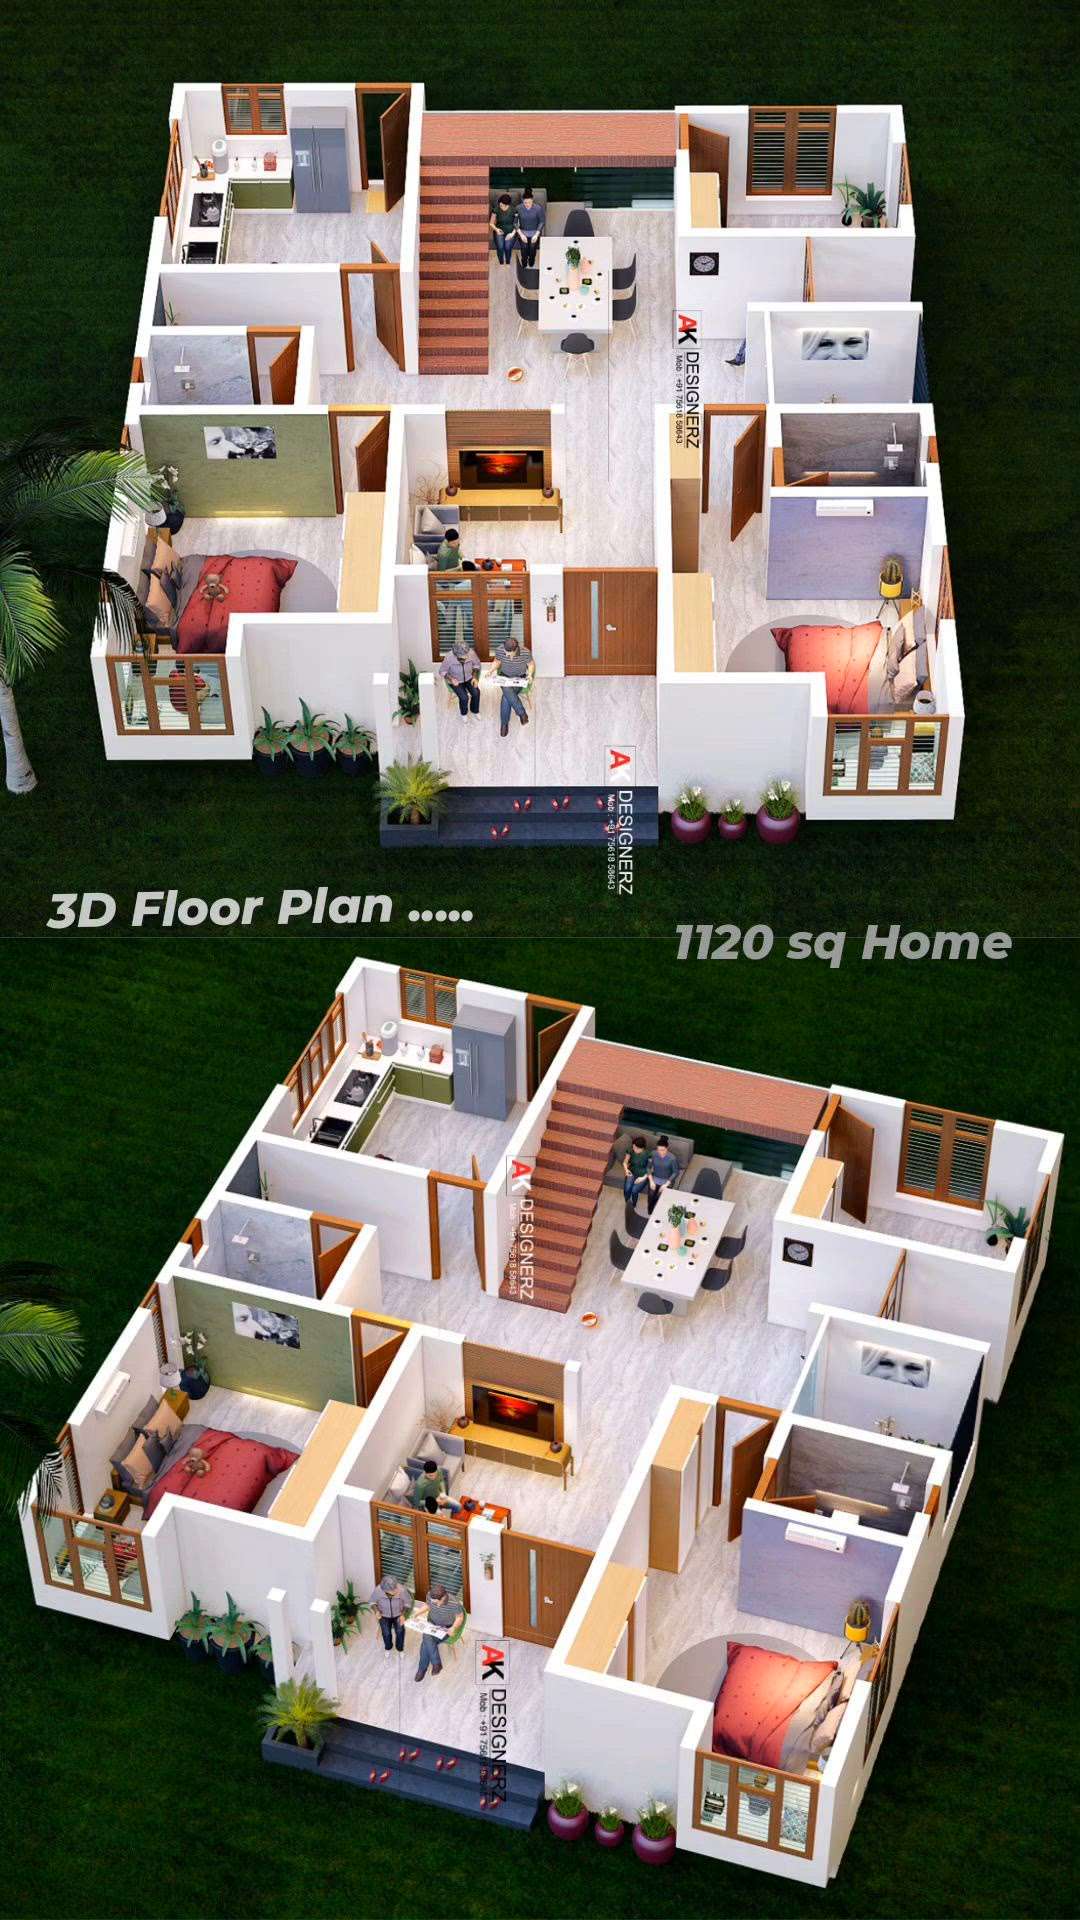 Home 3D Floor Plan 
_Area :1120sq_
_

📍Dm Us For Any Design @ak_designz____

Contact me on whatsapp
📞7561858643

#designer_767 #house #housedesign #housedesigns #residentionaldesign #homedesign #residentialdesign #residential #civilengineering #autocad #3ddesign #arcdaily #architecture #architecturedesign #architectural #keralahome
#house3d #keralahomes  #budget_home_simple_interi #budjecthomes #budgetplans 
@kolo.kerala @archidesign.kerala @archdaily

#budgethomes #ElevationHome #SmallBudgetRenovation #budgethomeplan #budgethouses #budgetprice
#3Dfloorplans #3Dfloorplans ##